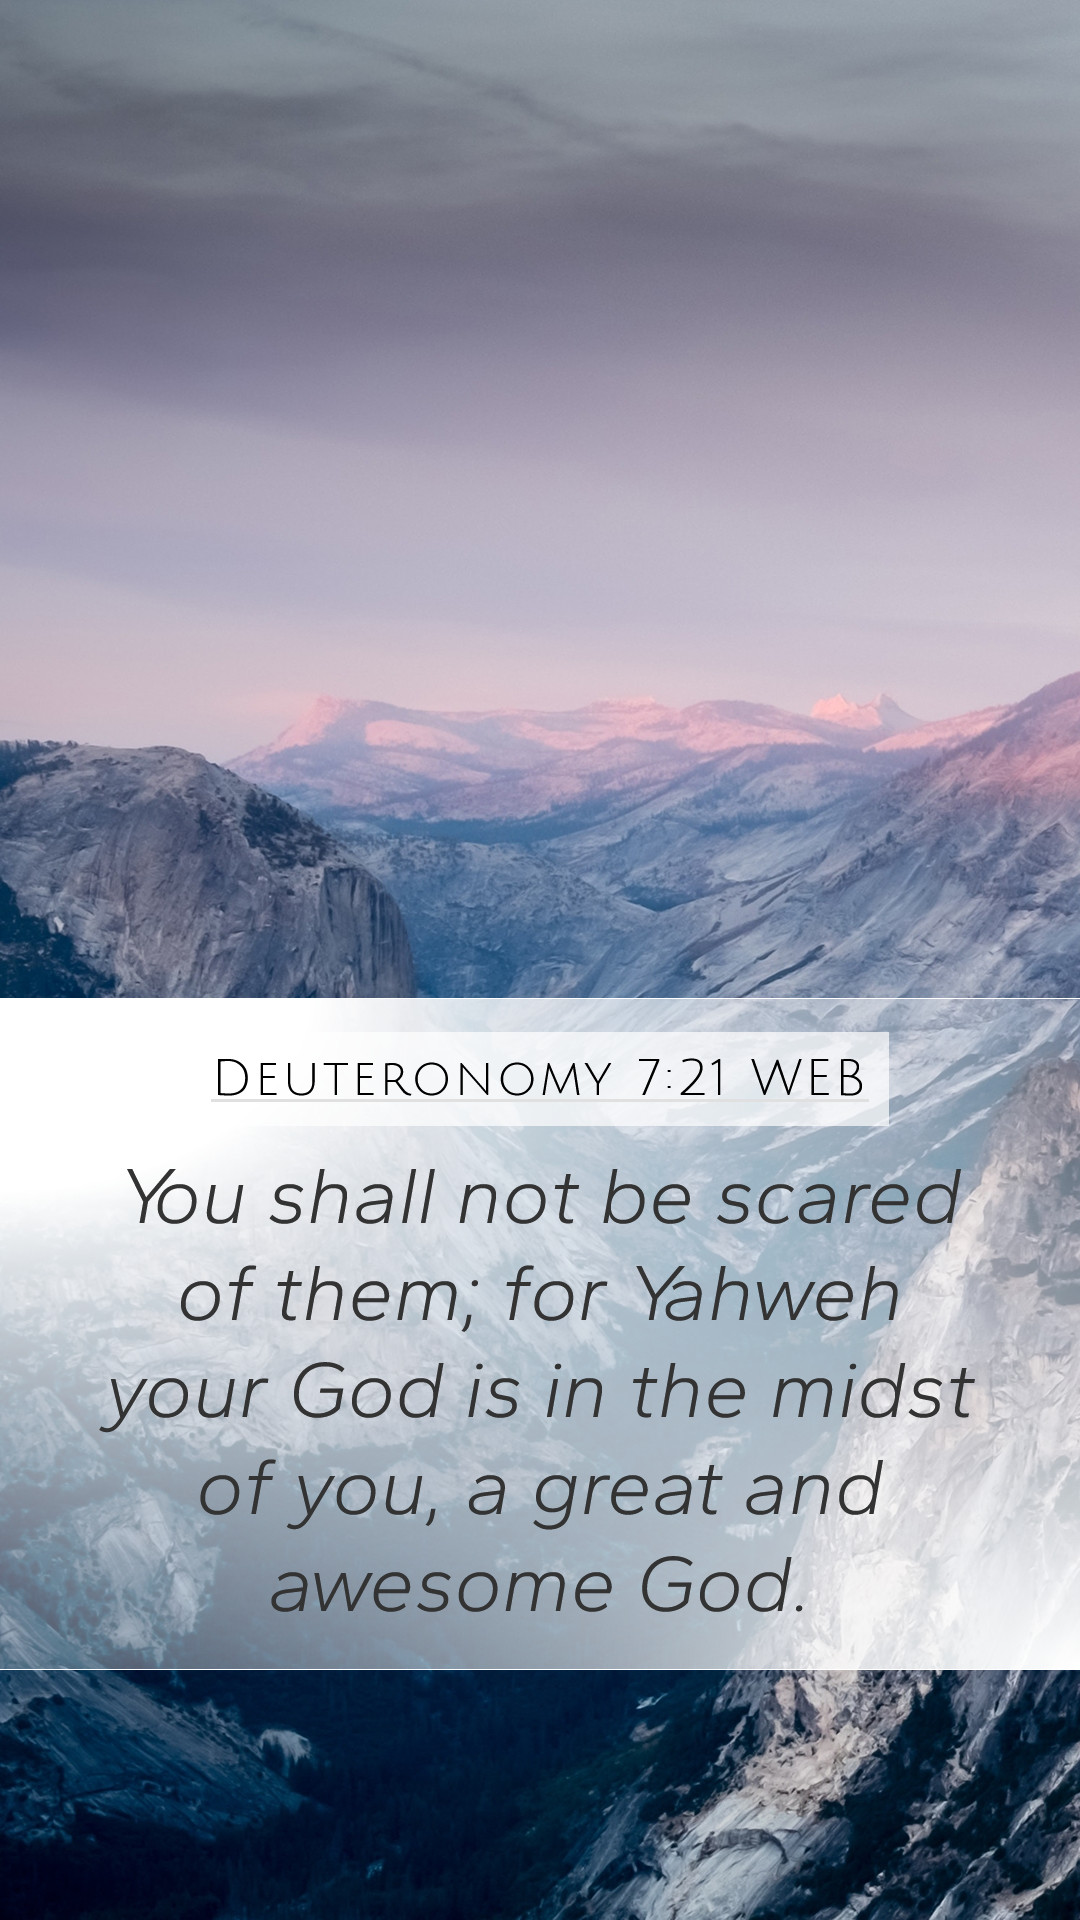 Deuteronomy web mobile phone wallpaper